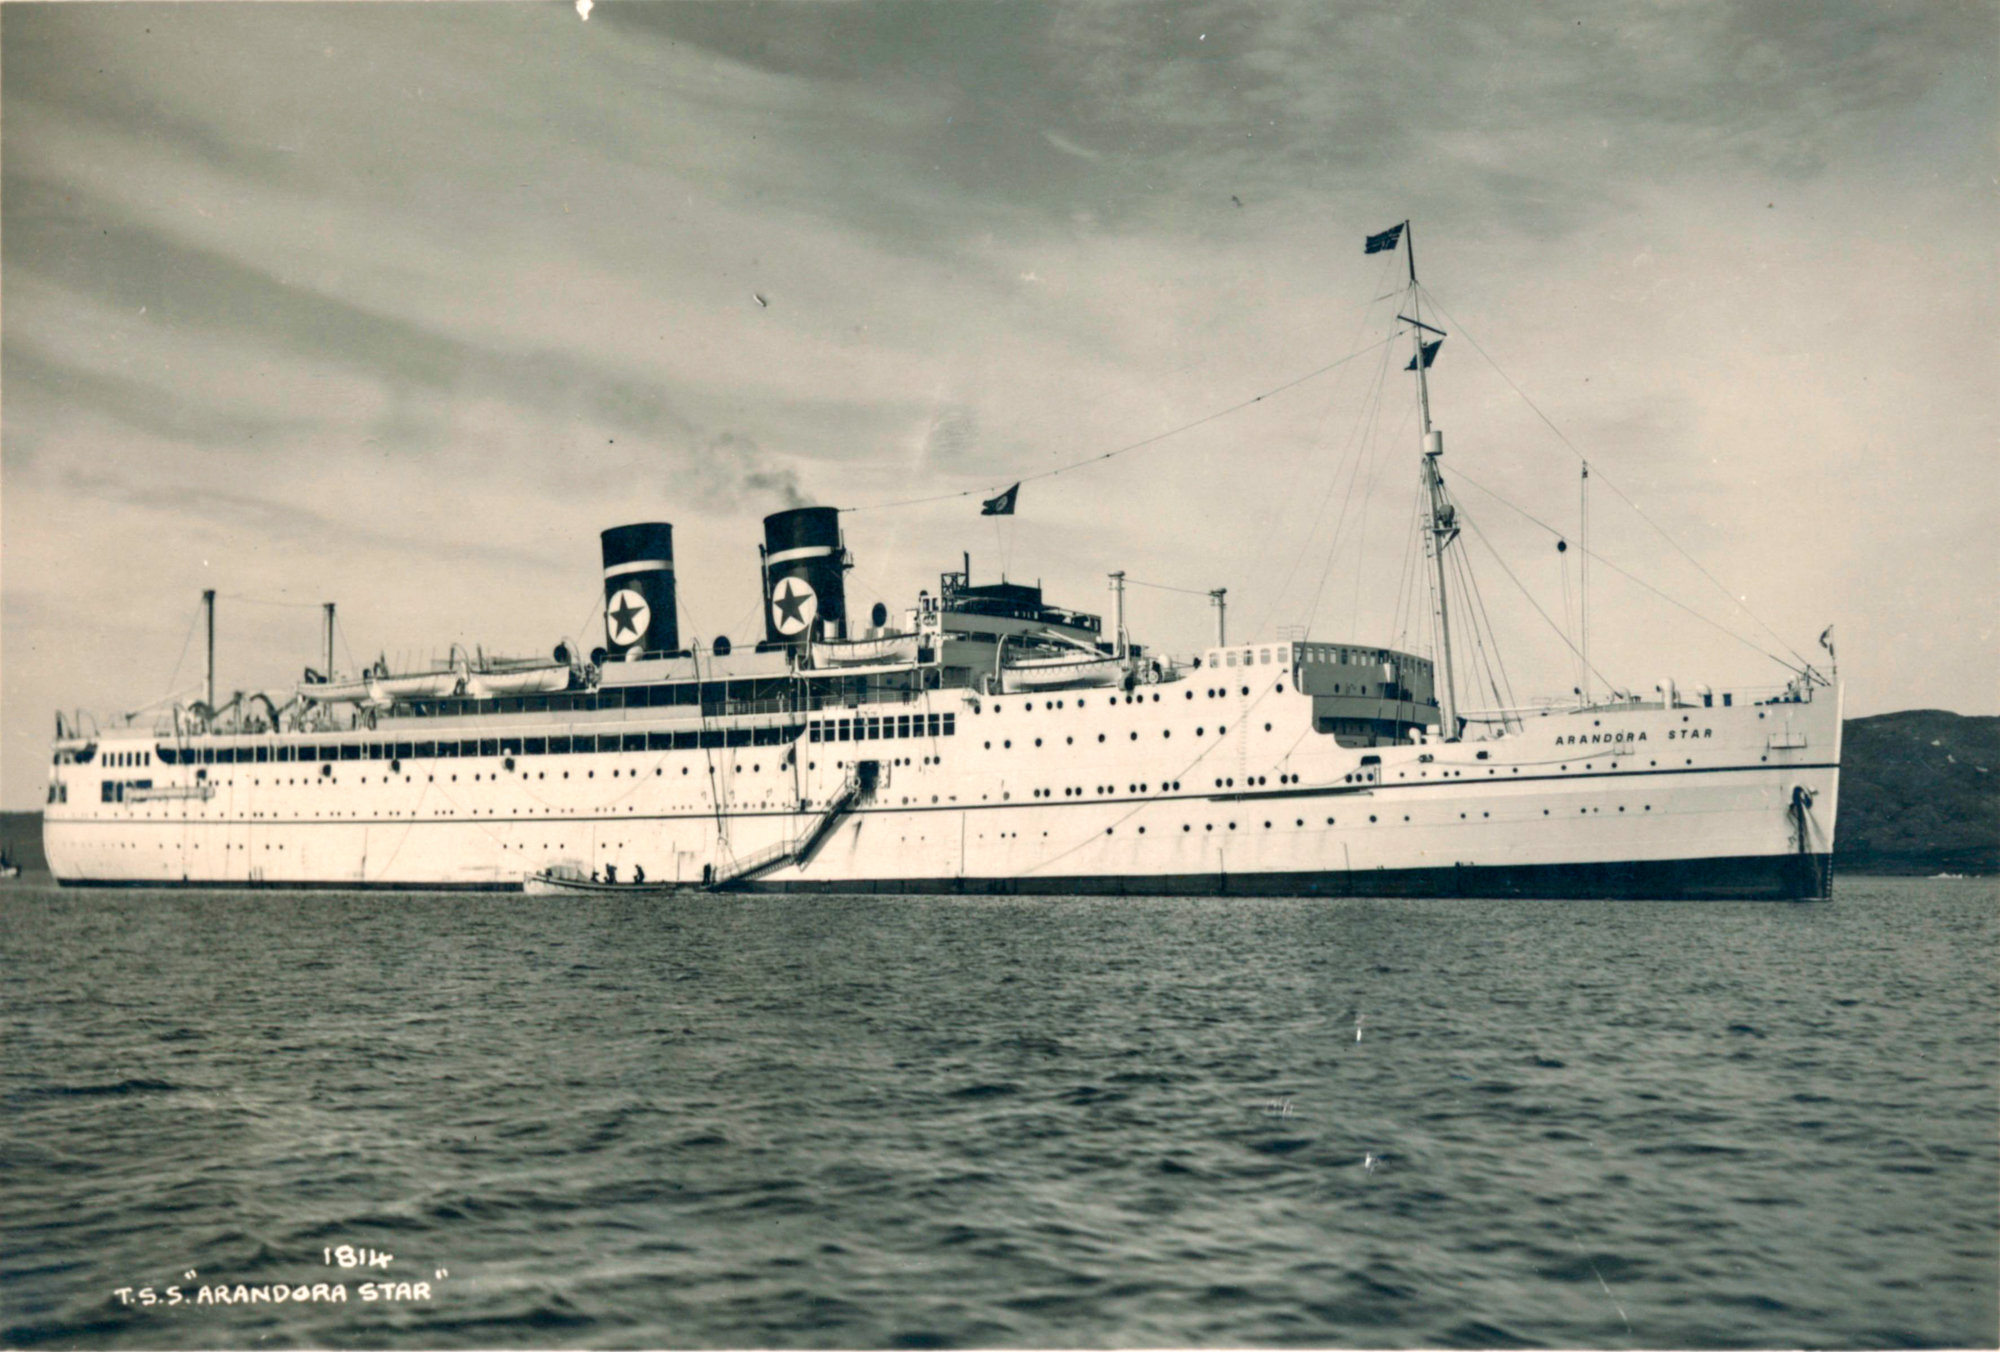 A black and white photo of the British passenger ship T.S.S. Arandora Star at sea.